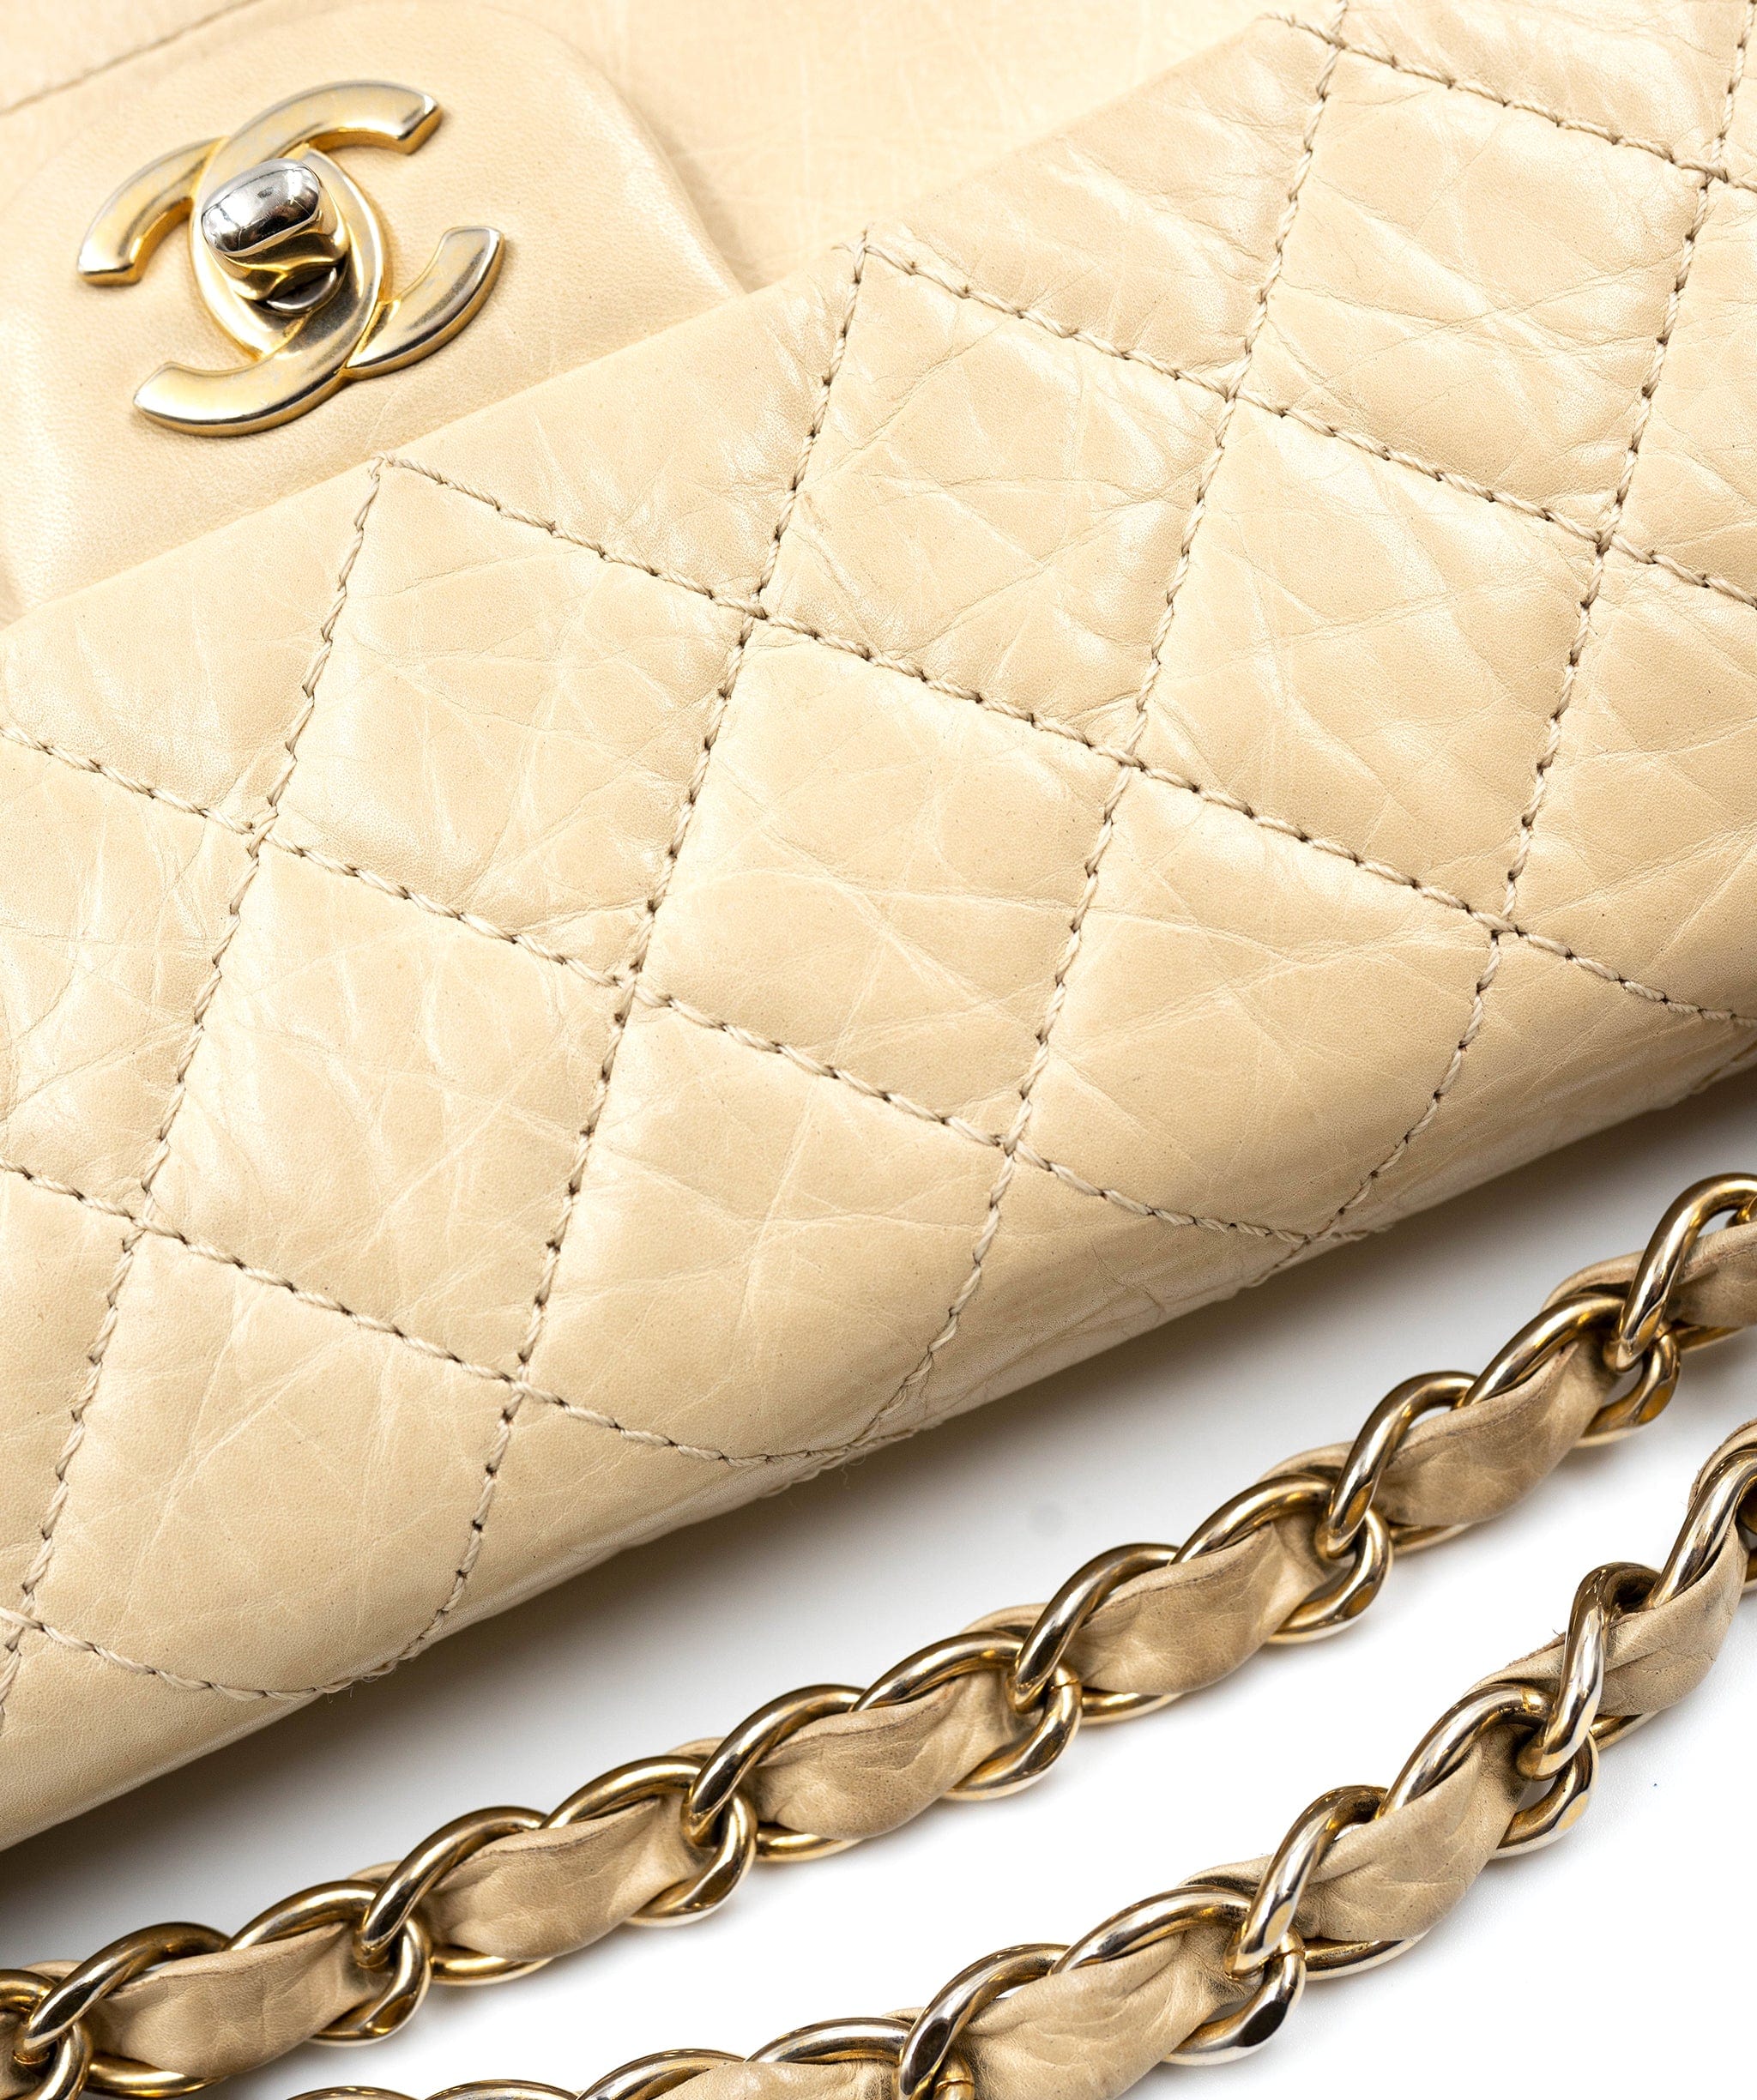 Chanel Chanel Reissue Beige 10" Medium Triple Flap Bag AGC1226